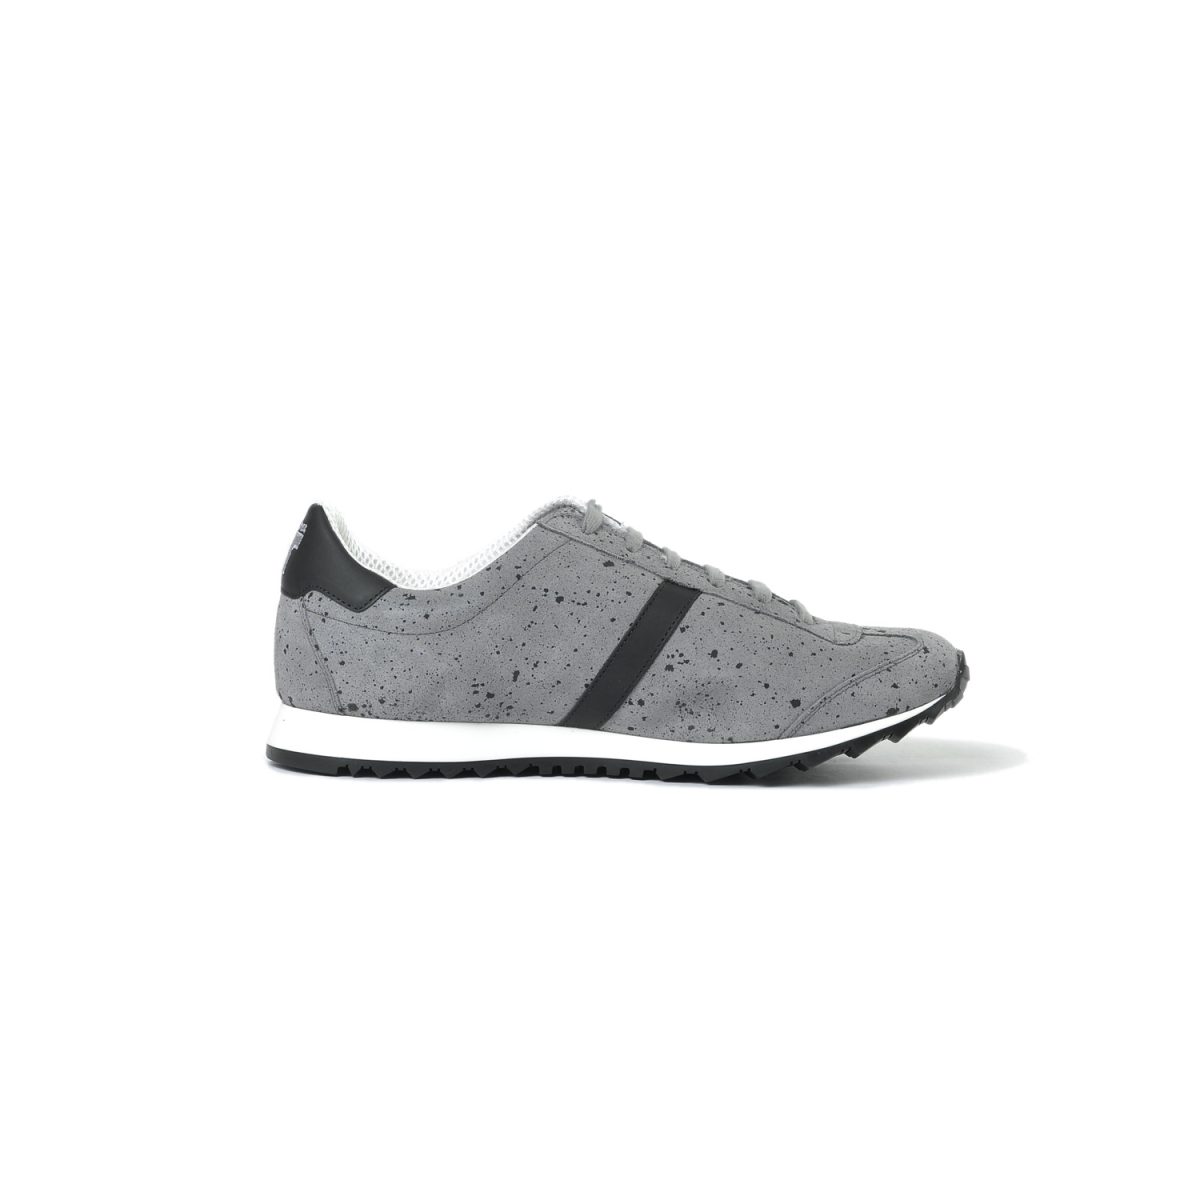 Tisza shoes - Martfű - Splash grey-black